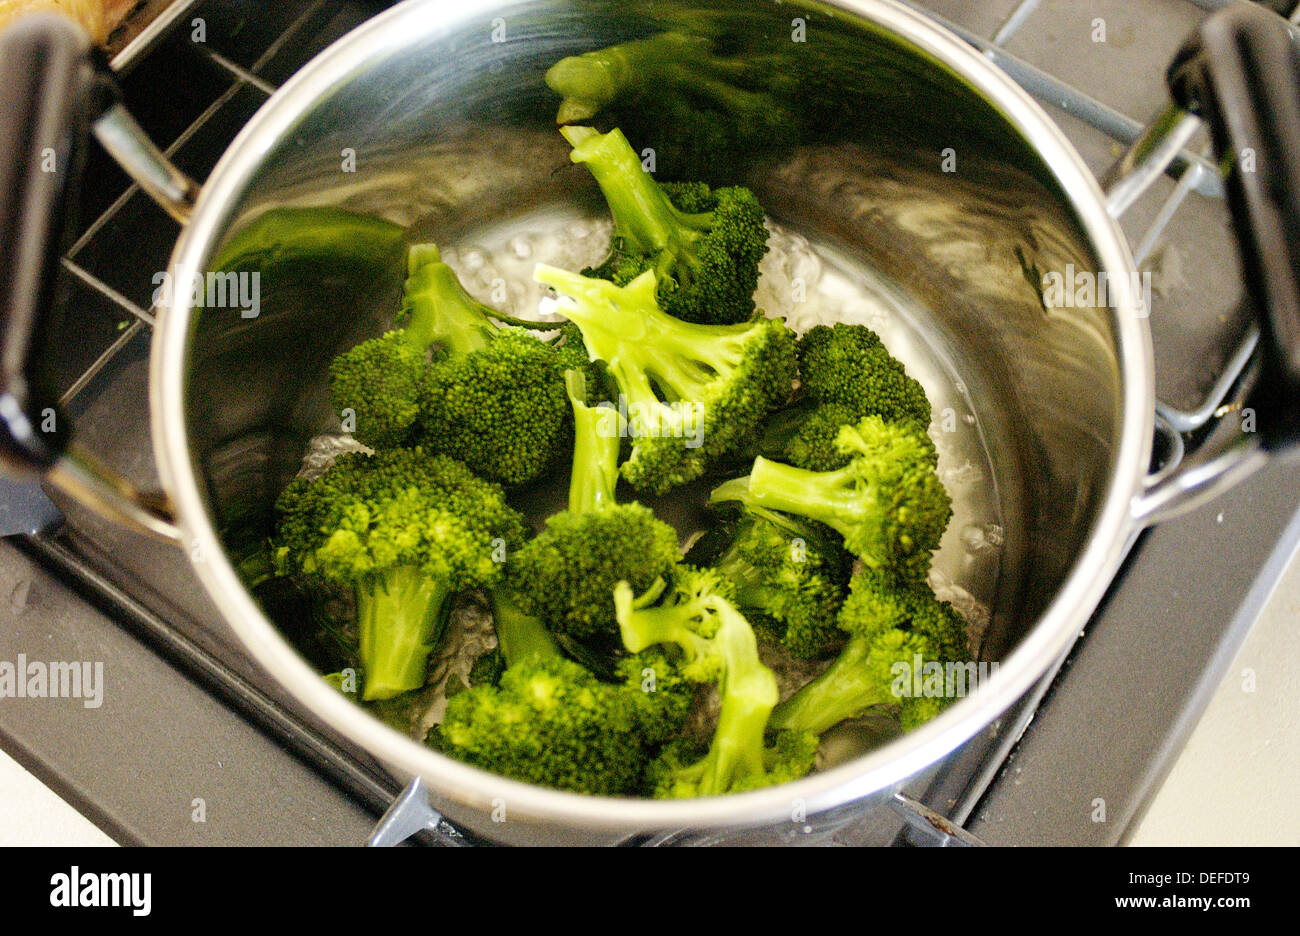 Steamed Broccoli In Pot On Stove Stock Photo Alamy,Contemporary Interior Design Characteristics